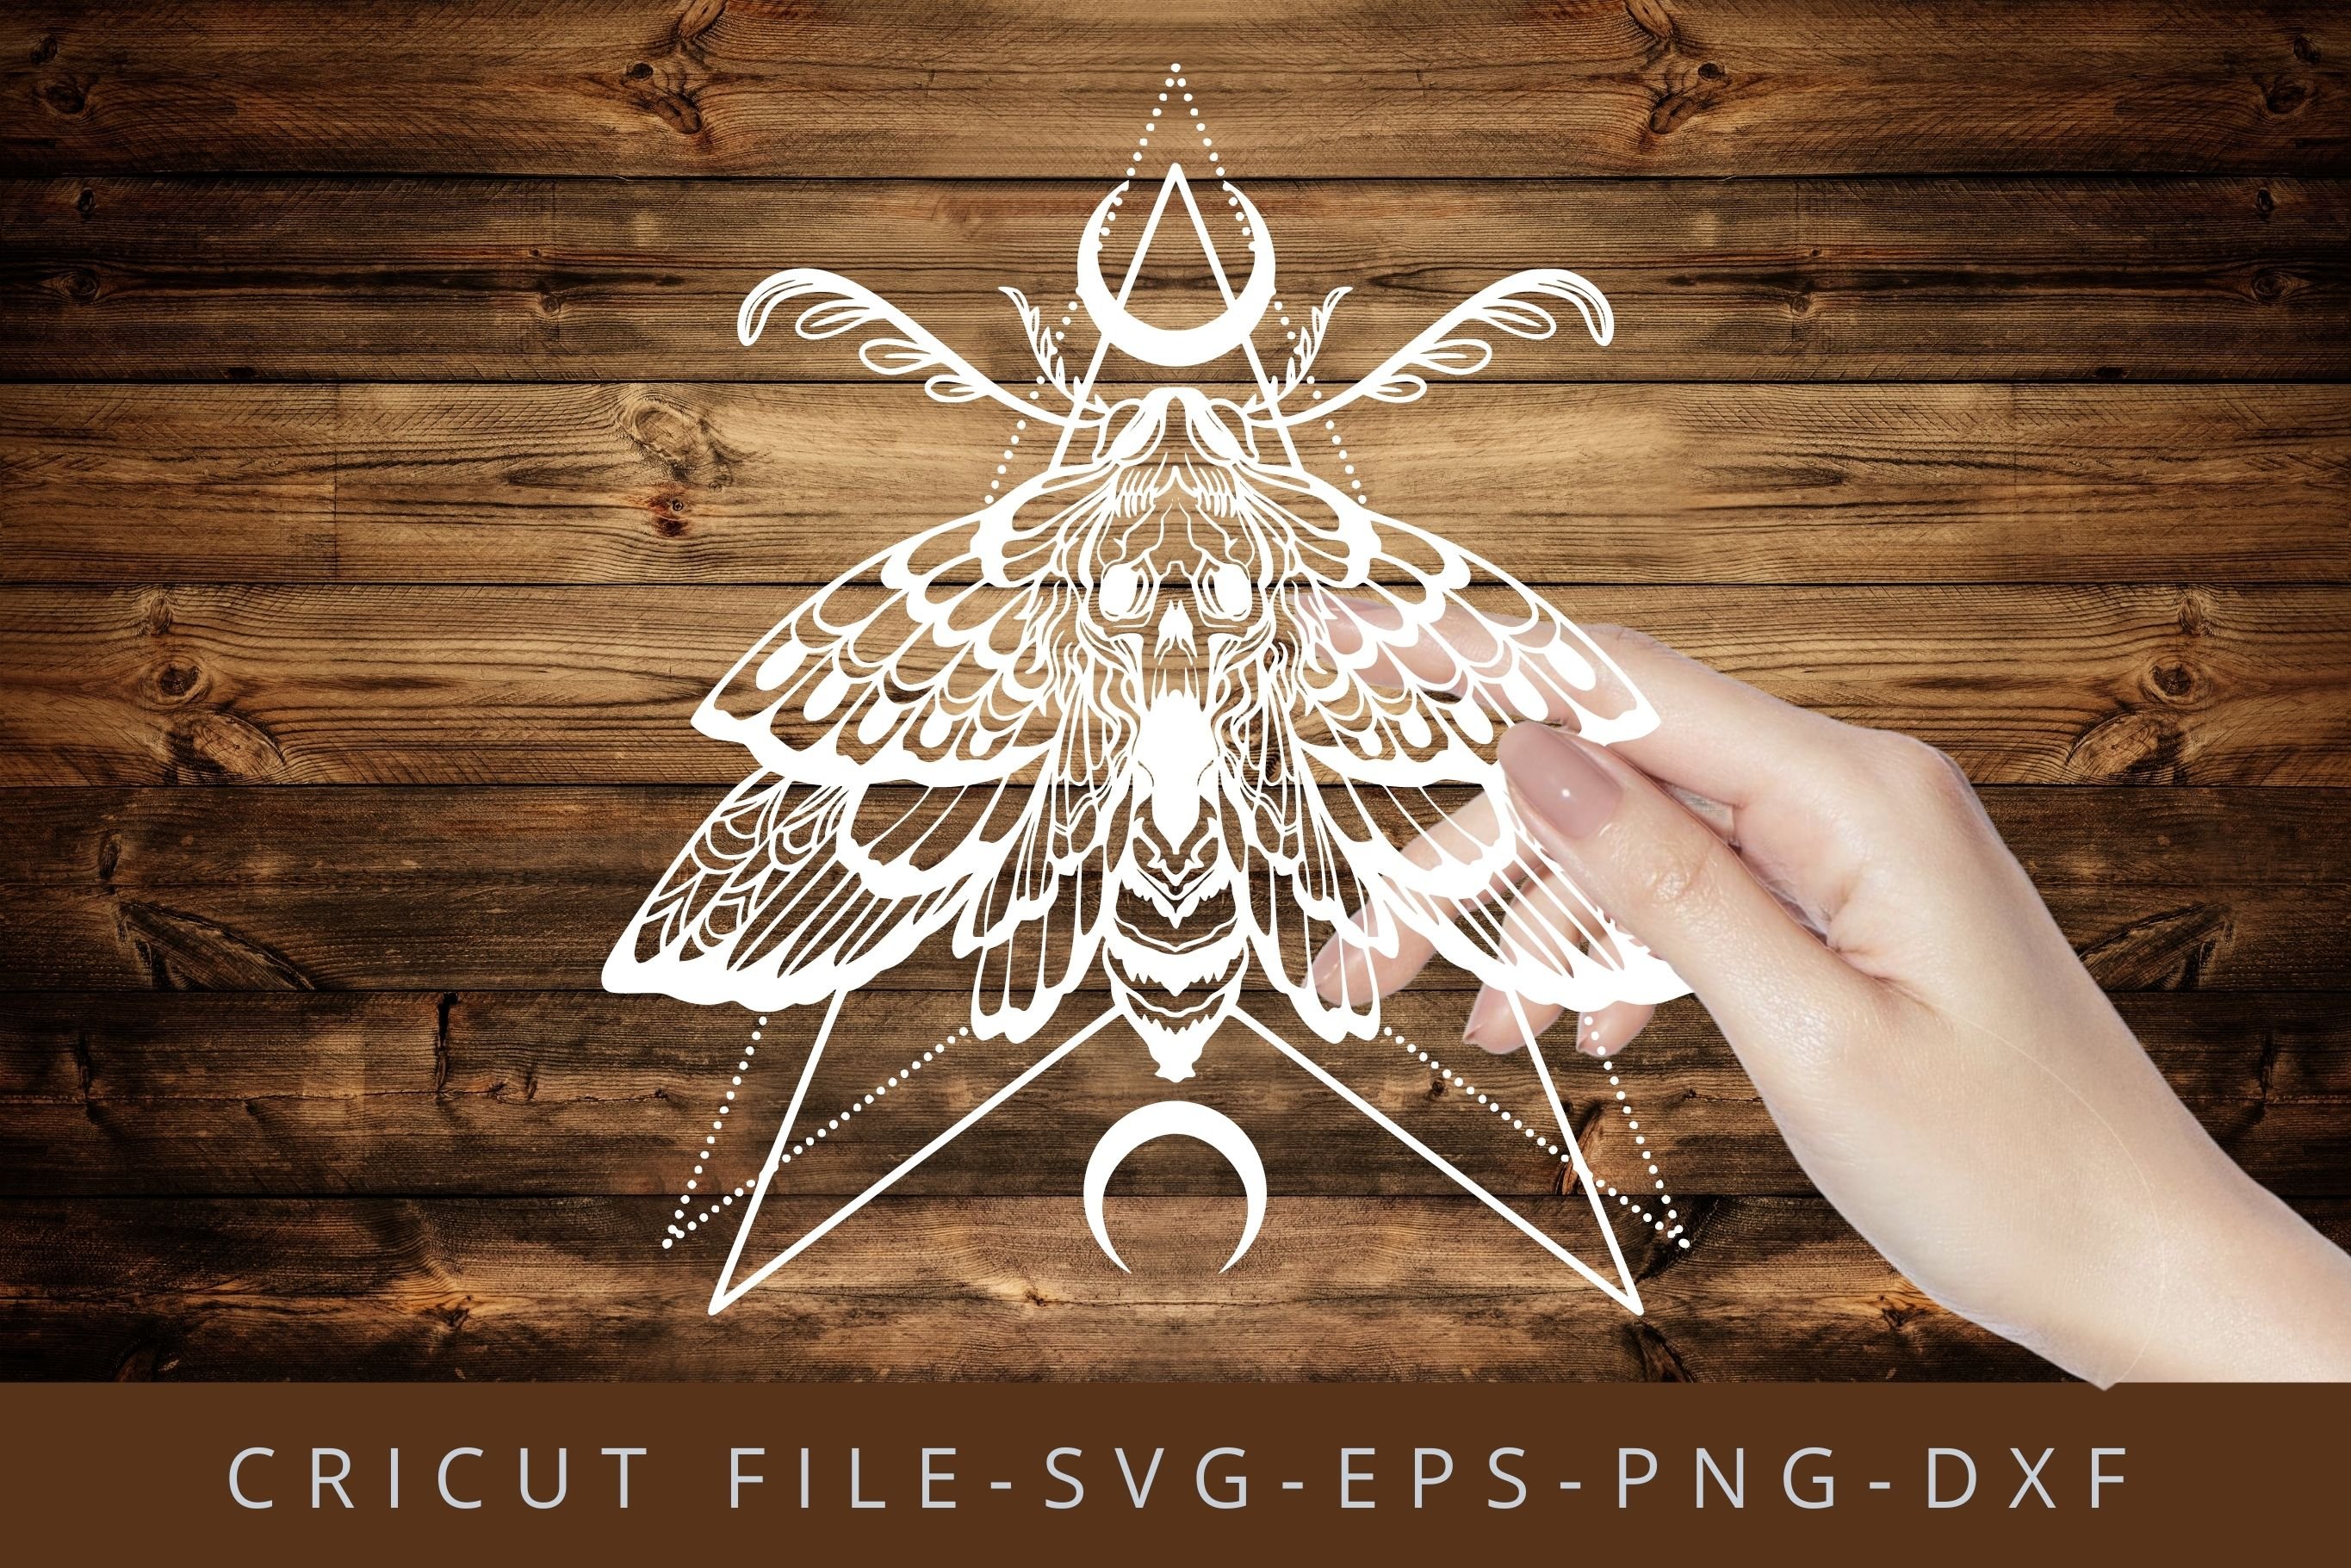 Moth SVG, Death Moth SVG Cut files preview image.